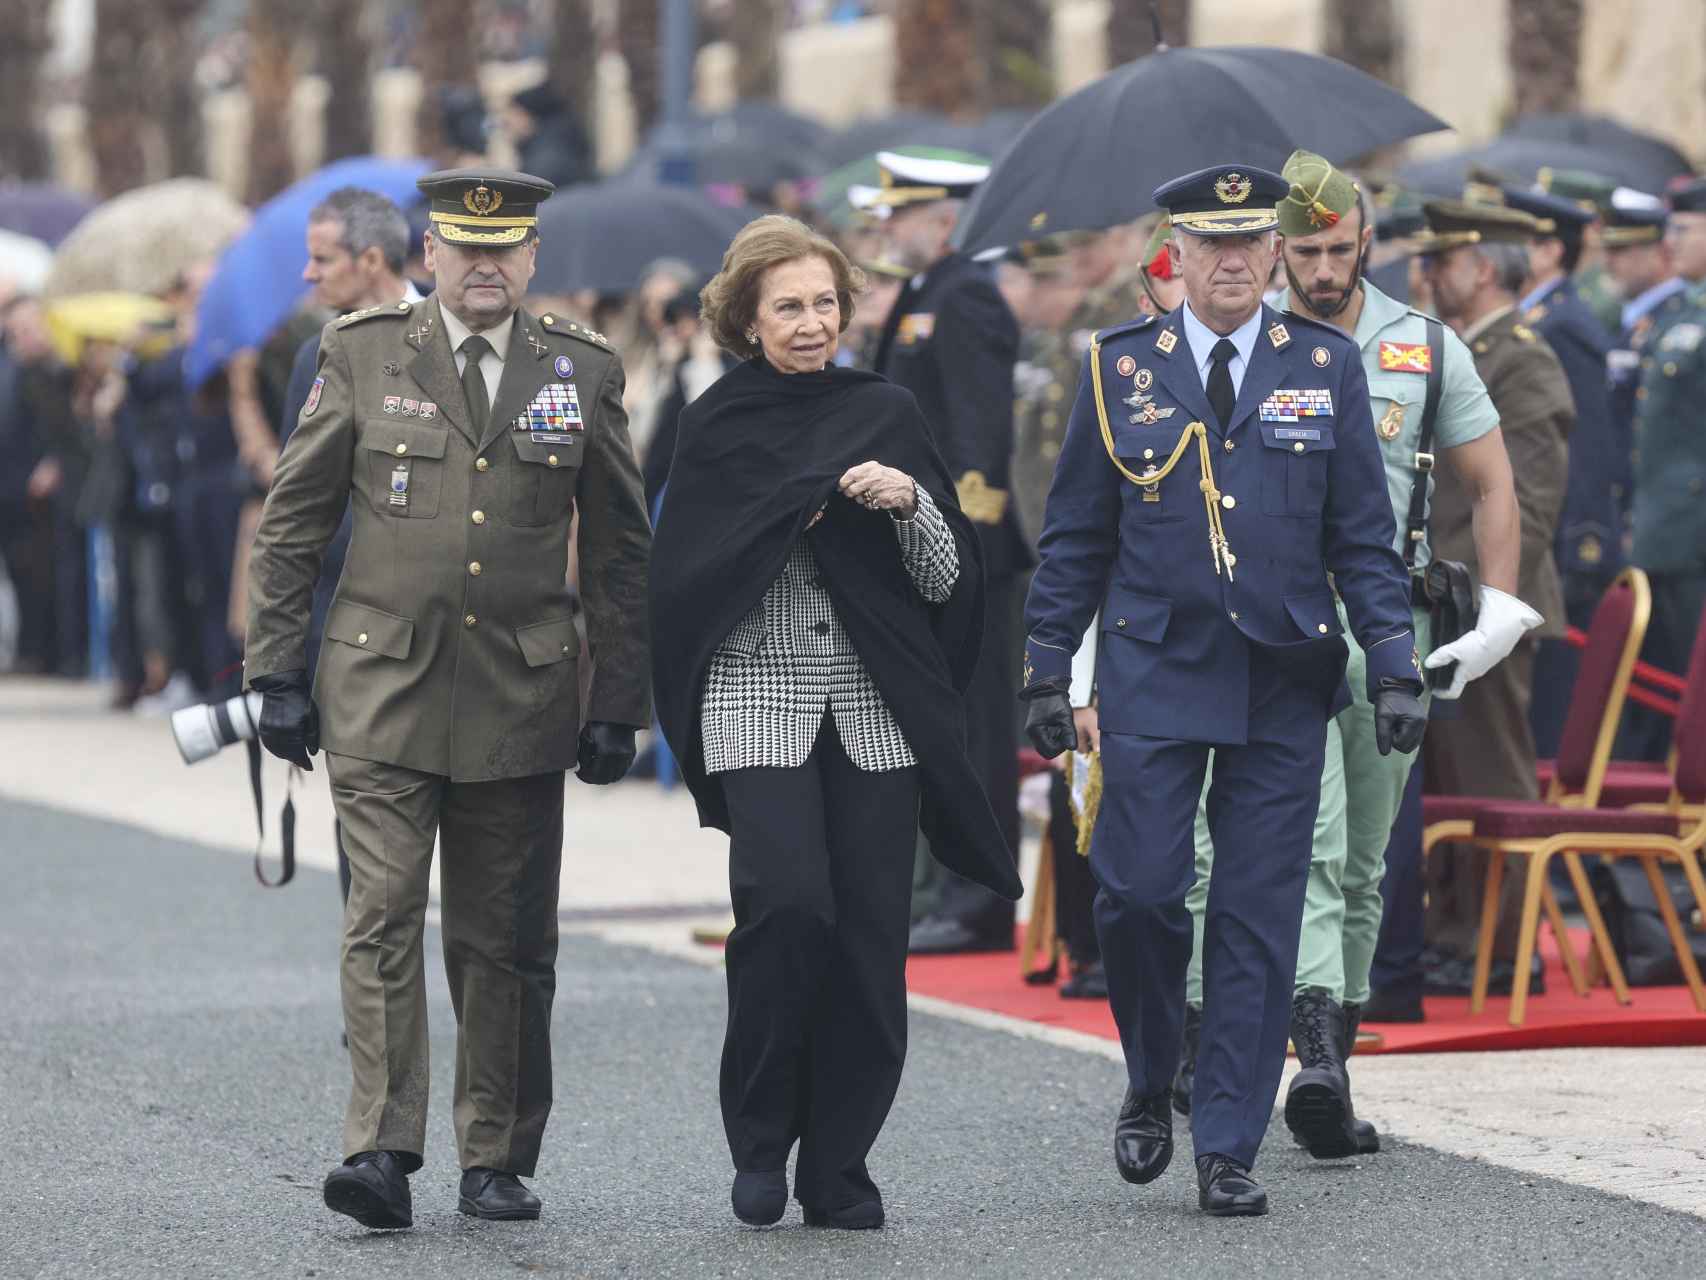 La reina Sofía camina con autoridades militares mientas la lluvia da un pequeño respiro.